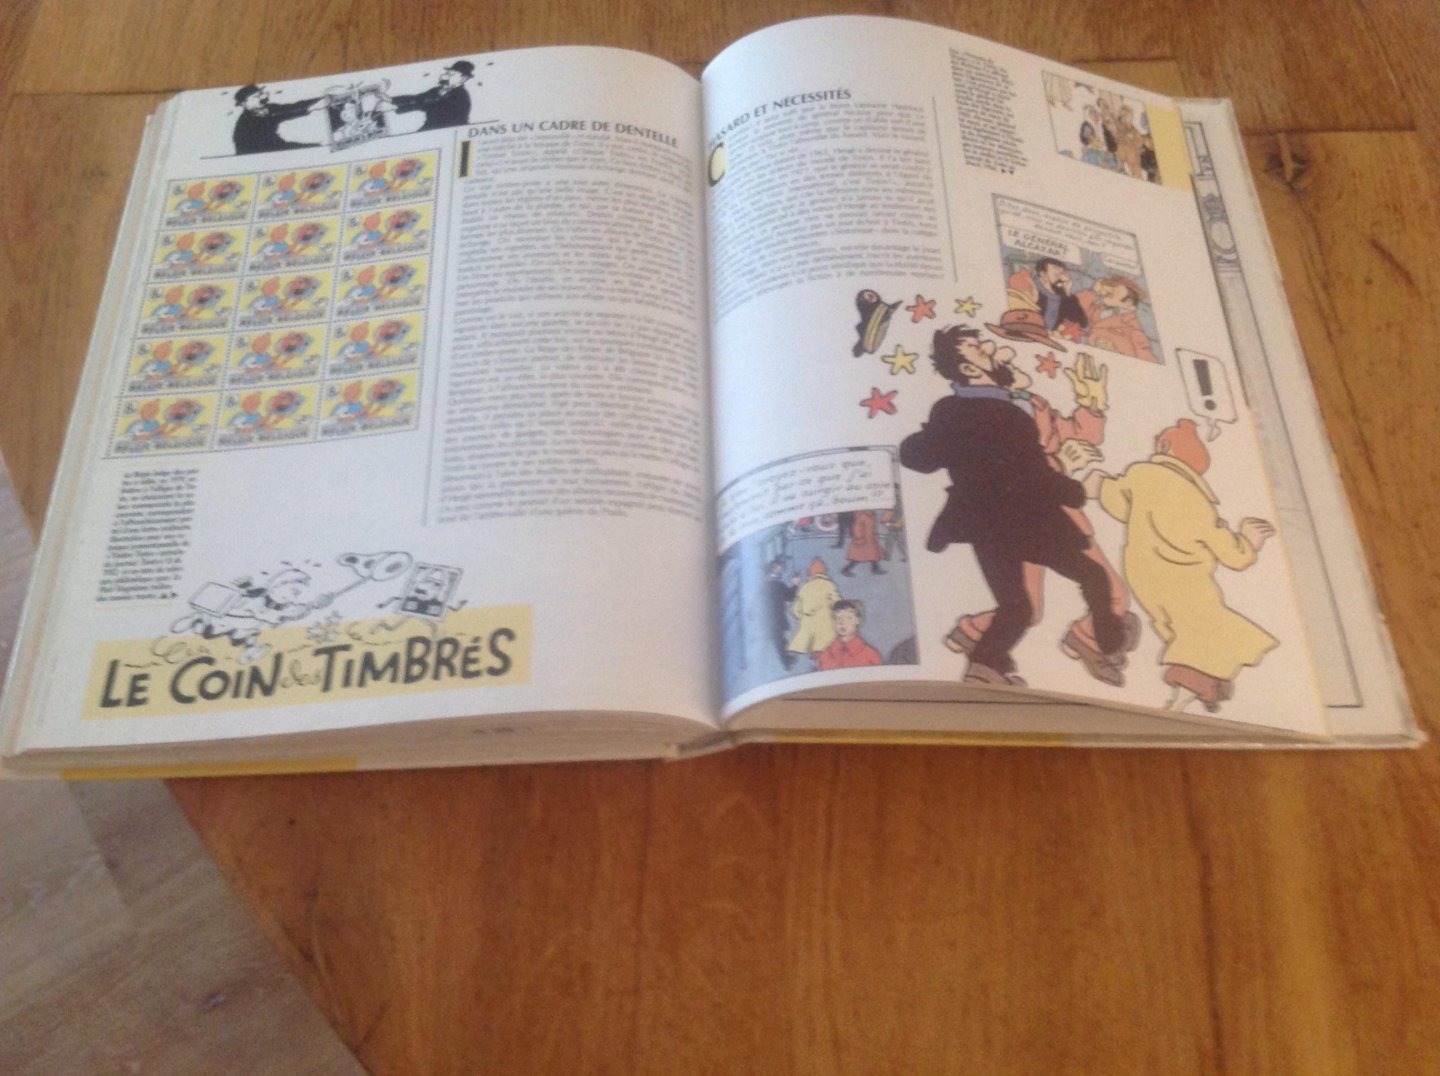 Philippe Goddin - Hergé et Tintin reporters Du Petit Vingtième au Journal Tintin.